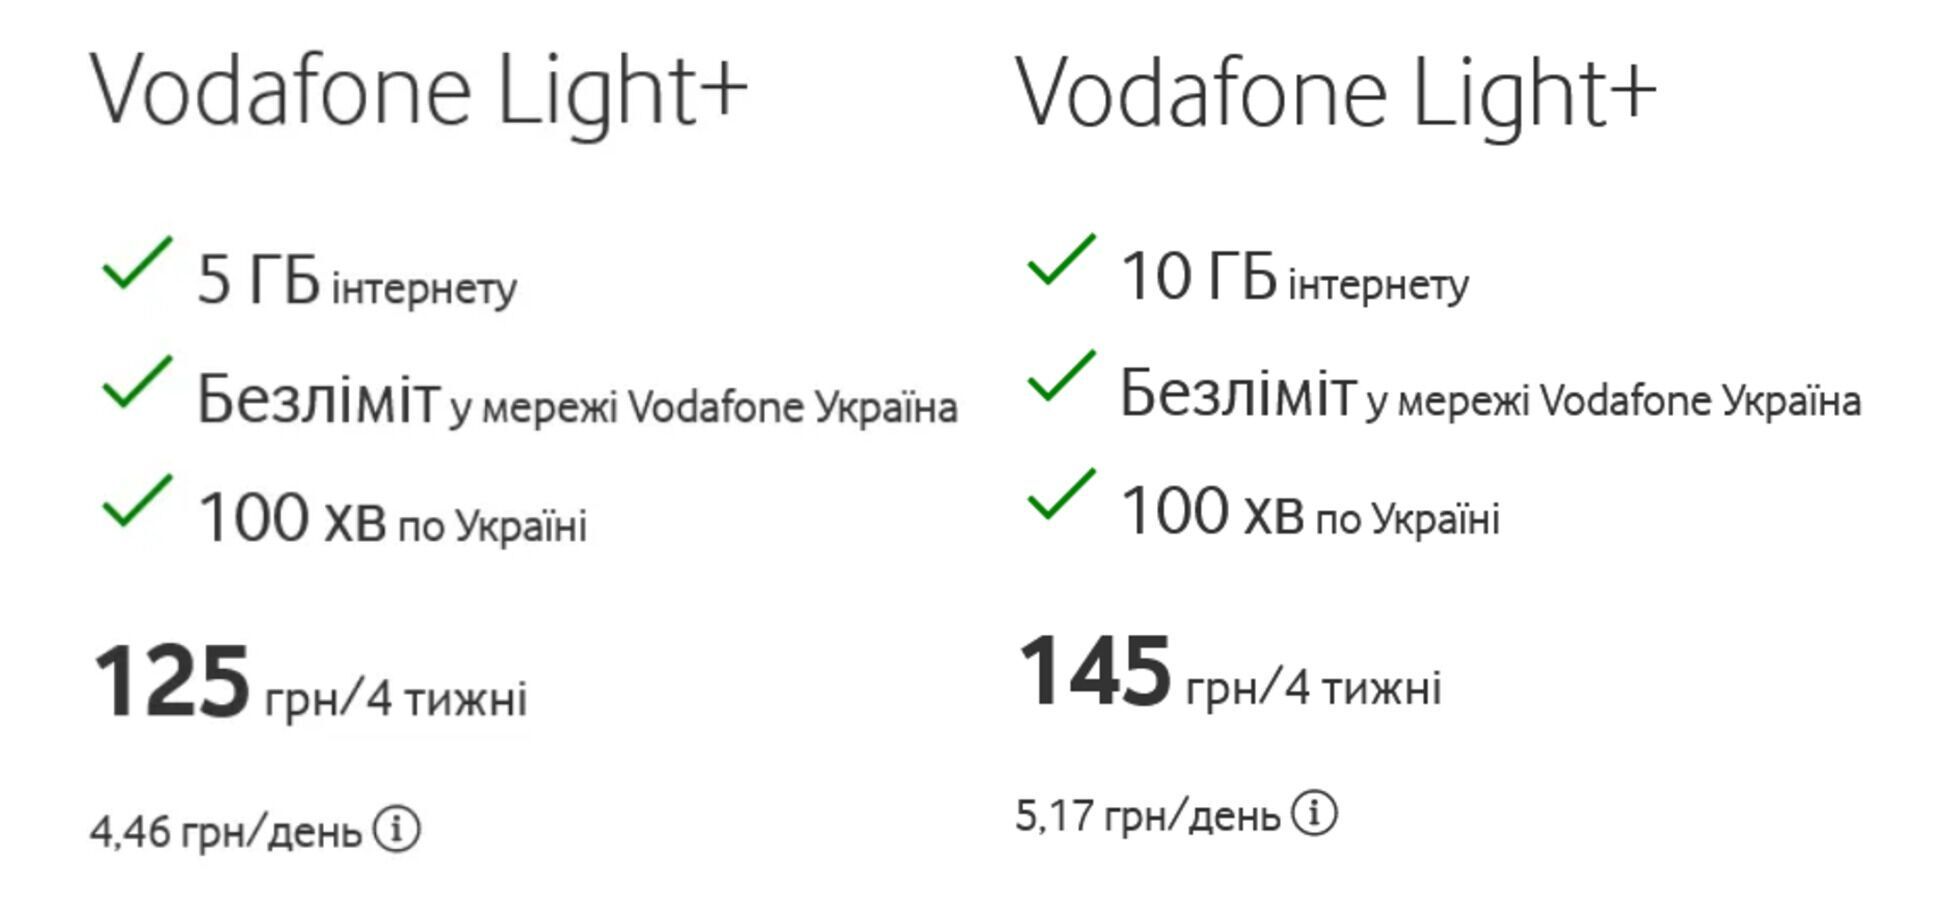 Стоимость тарифа Light+ выросла со 125 грн до 145 грн